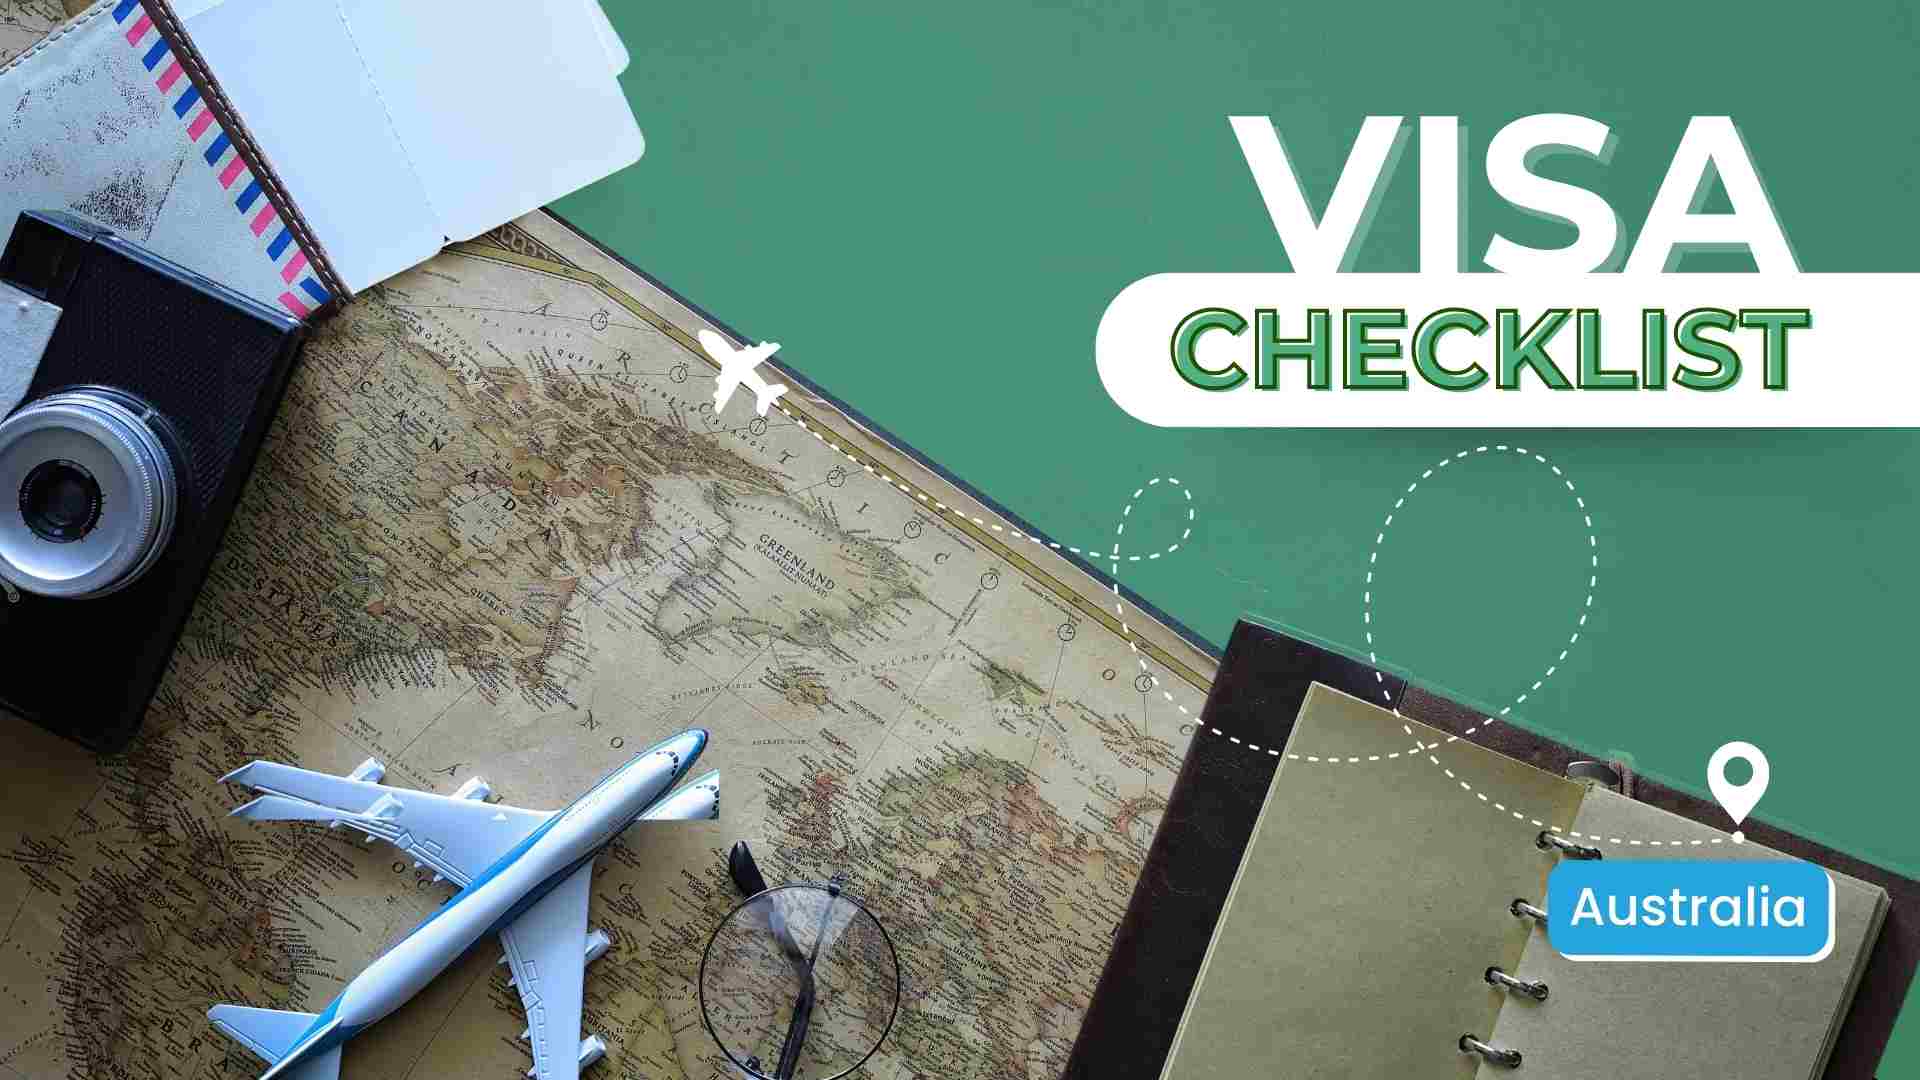 Australia visa application checklist